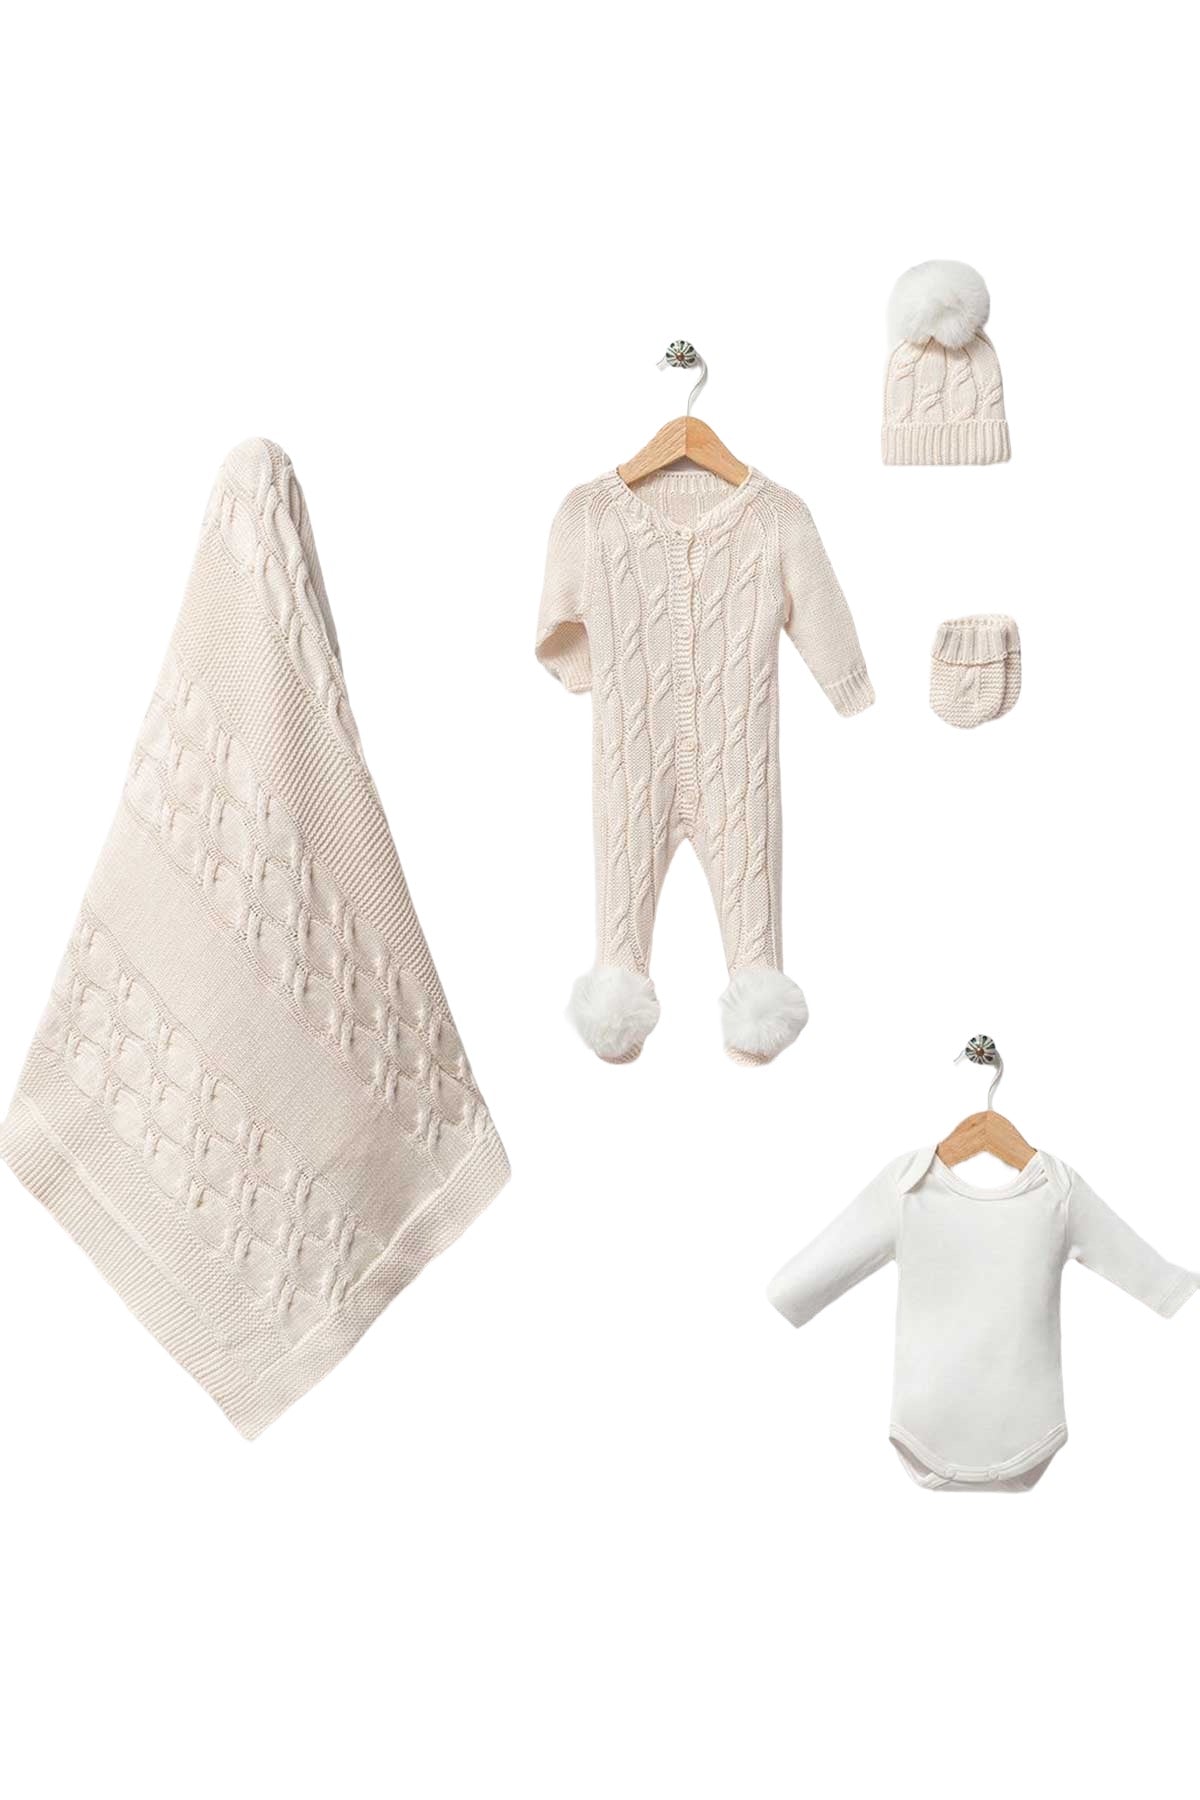 Daniel Cream Newborn Knit Coming Home Set (5 Pcs)